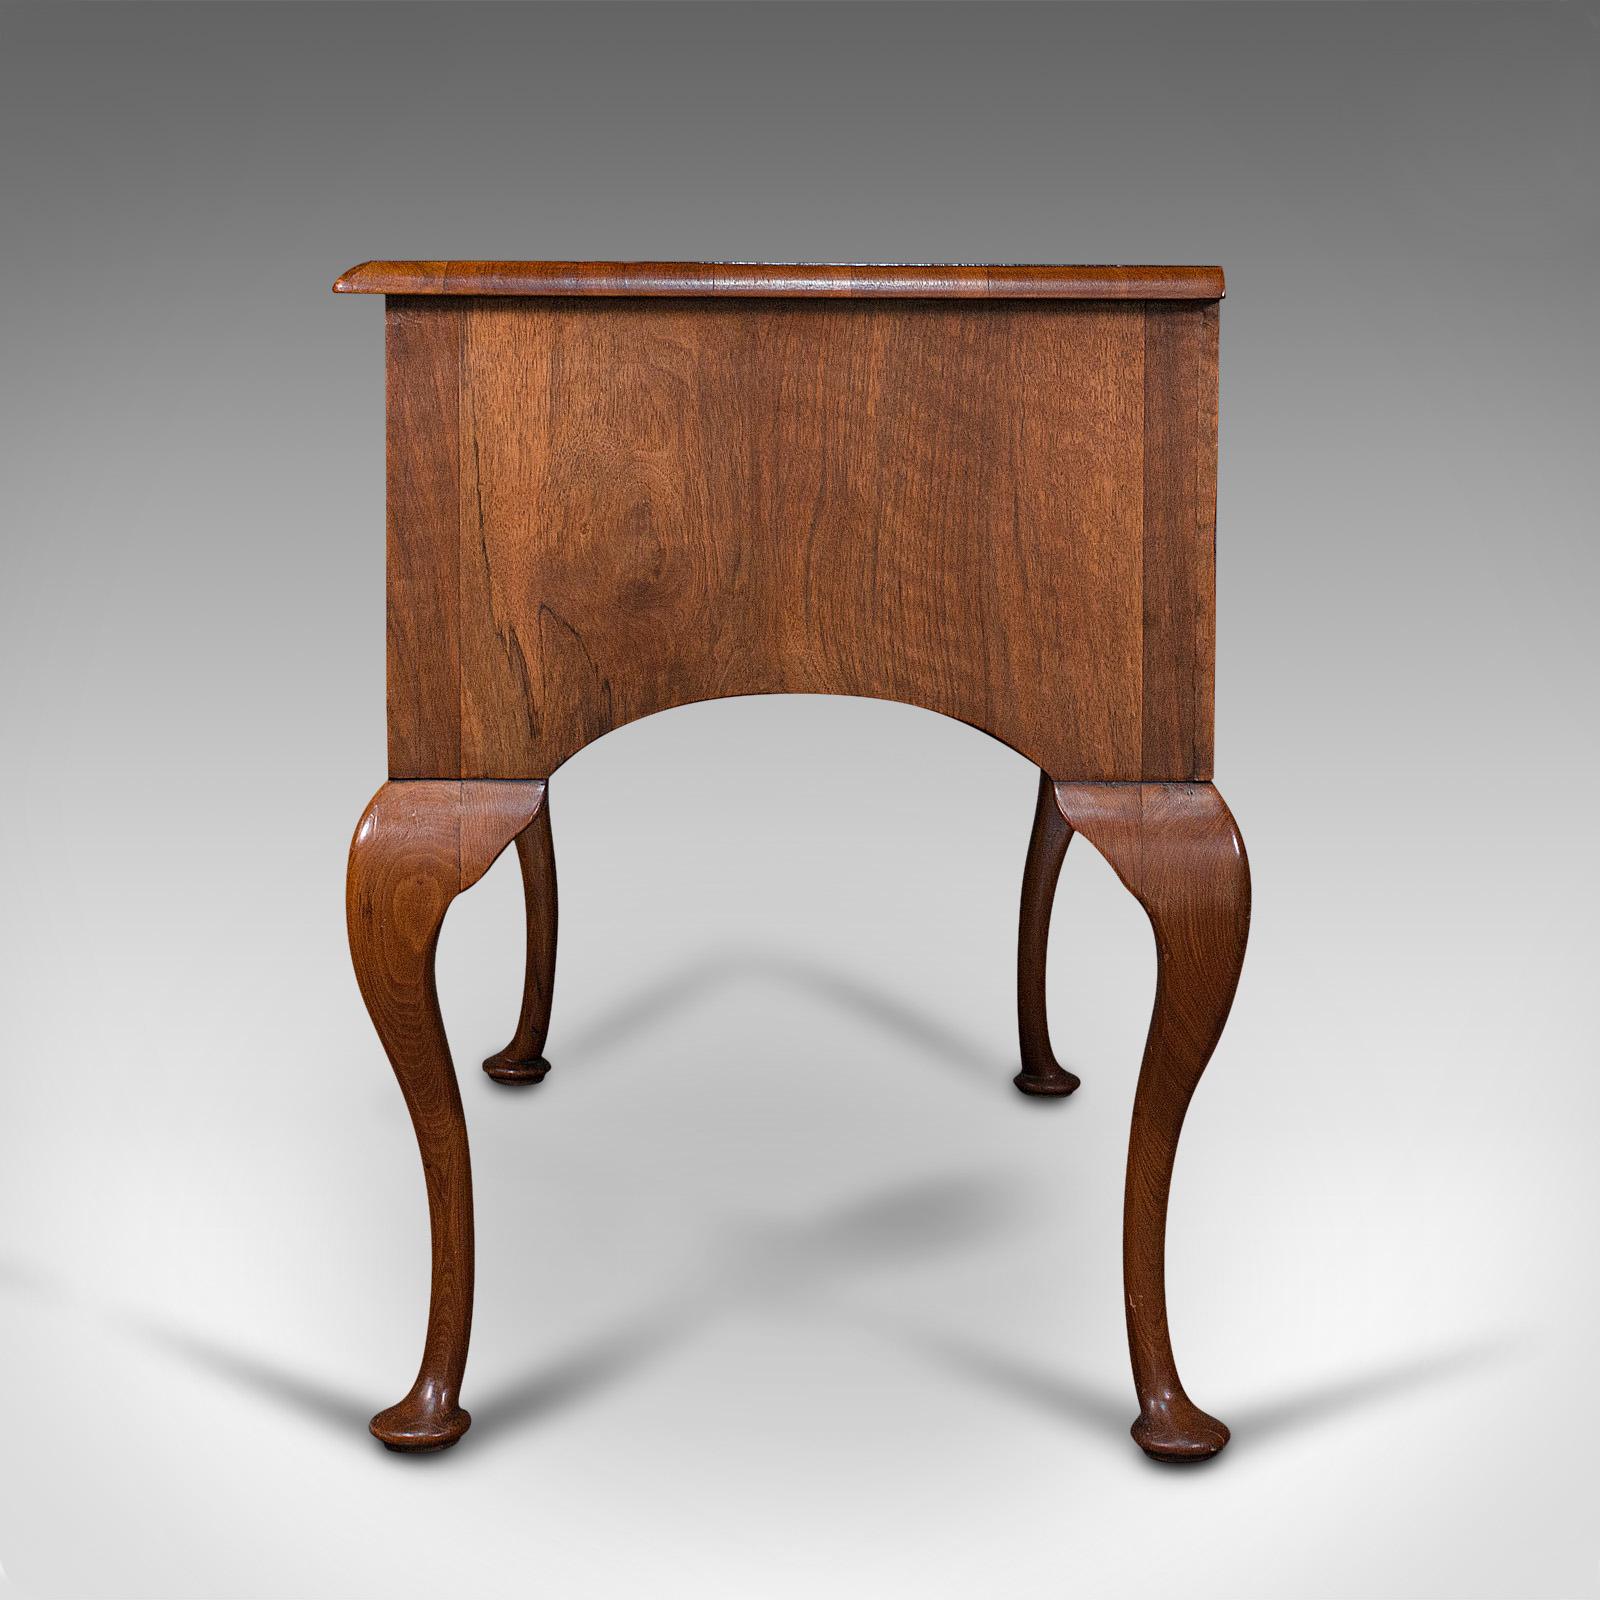 British Antique Writing Desk, English, Burr Walnut, Oak, Lowboy, Table, Georgian, C.1800